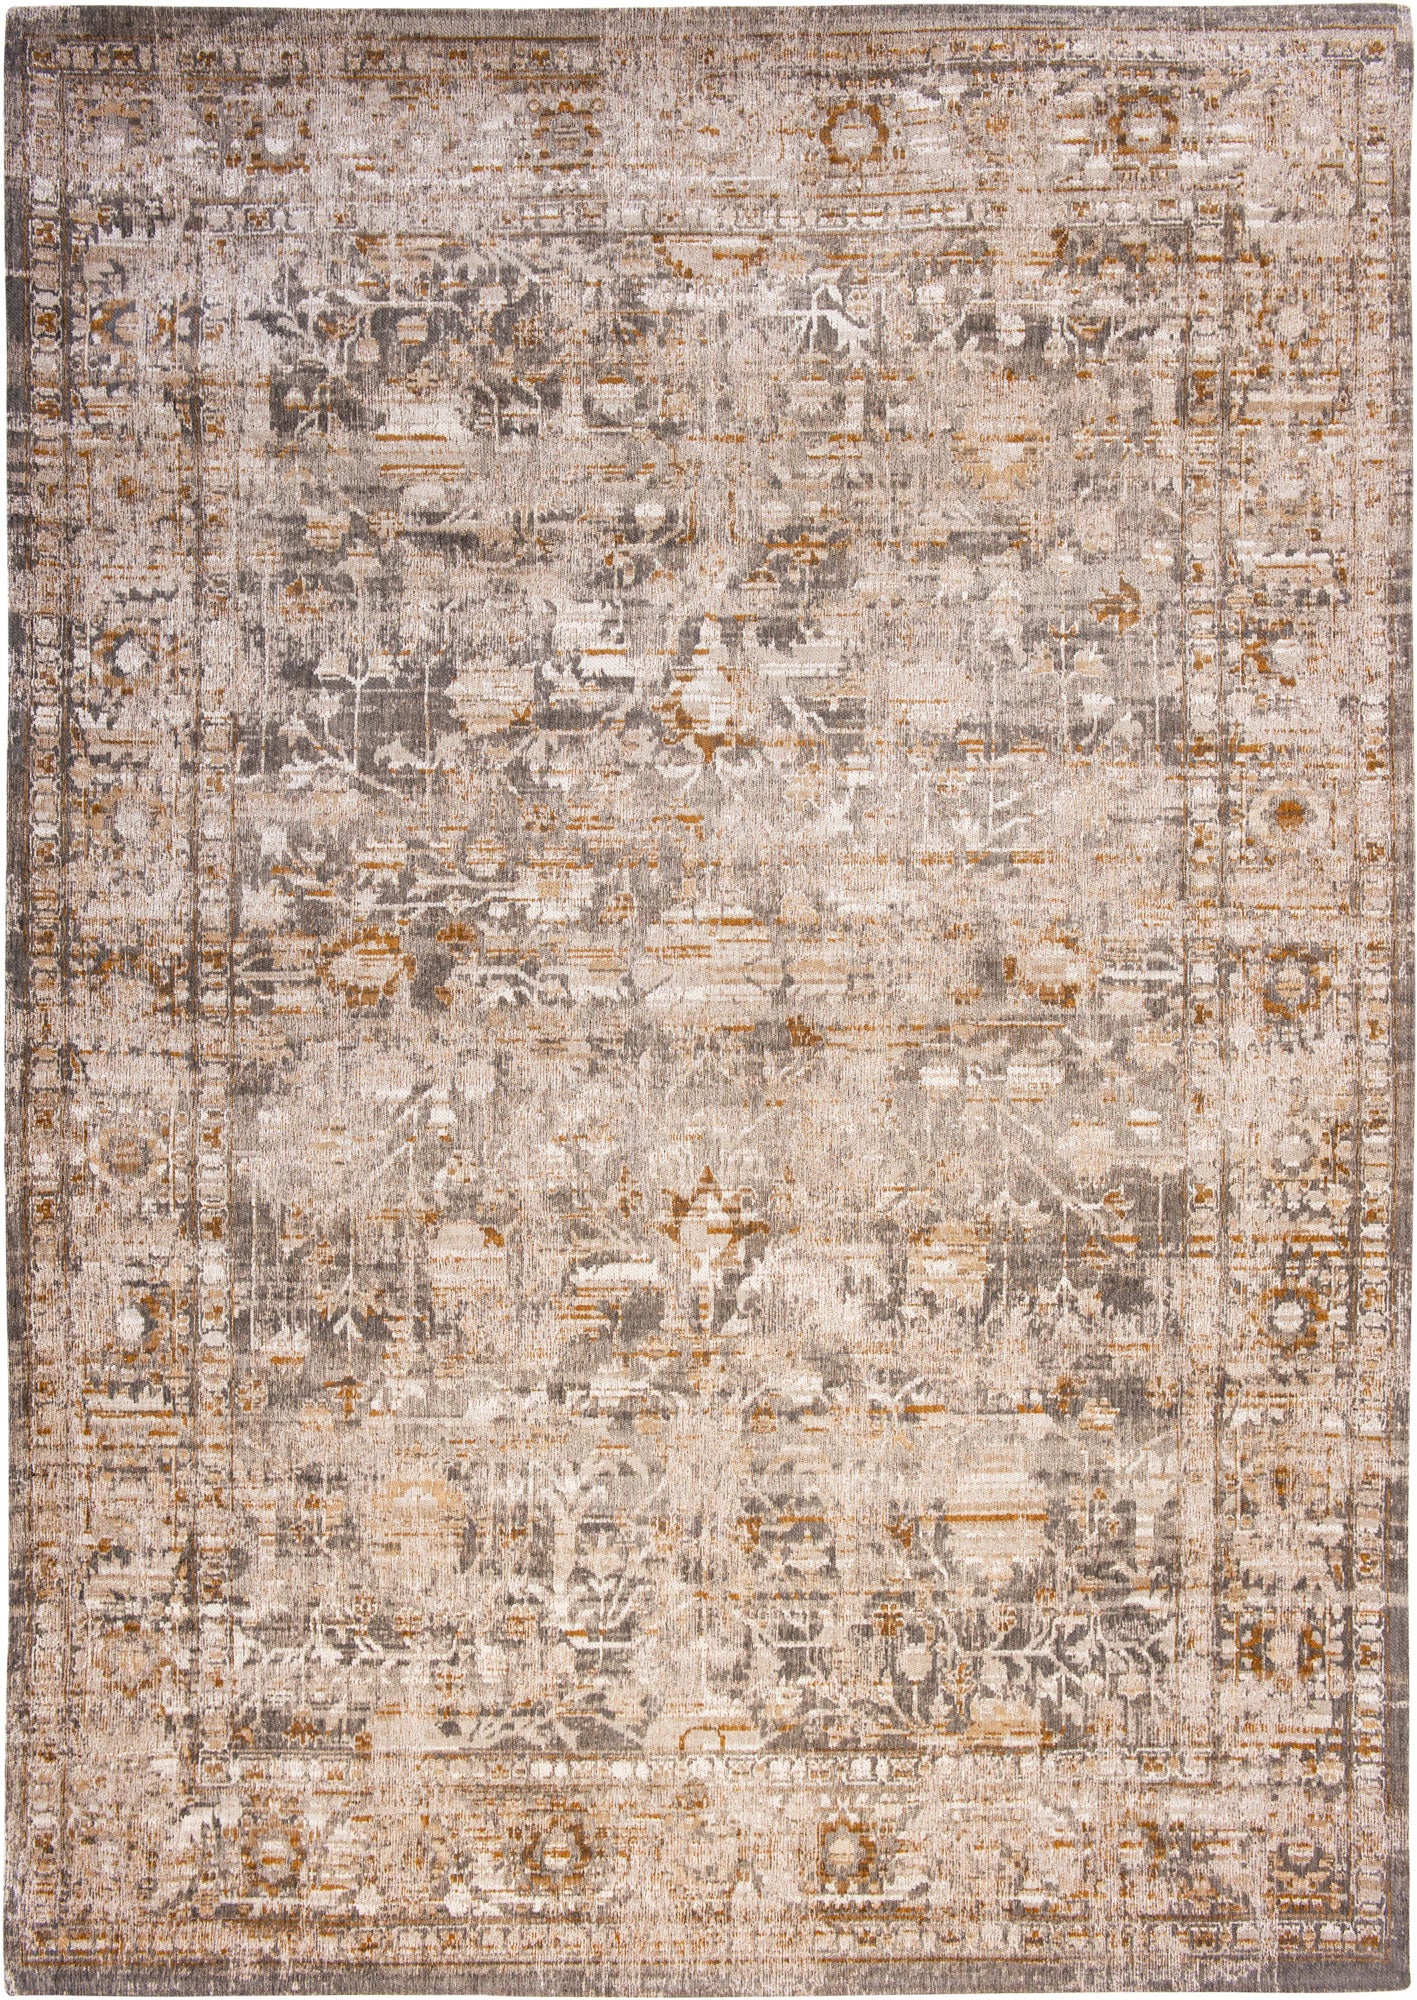 US-201: Jacquard rugs